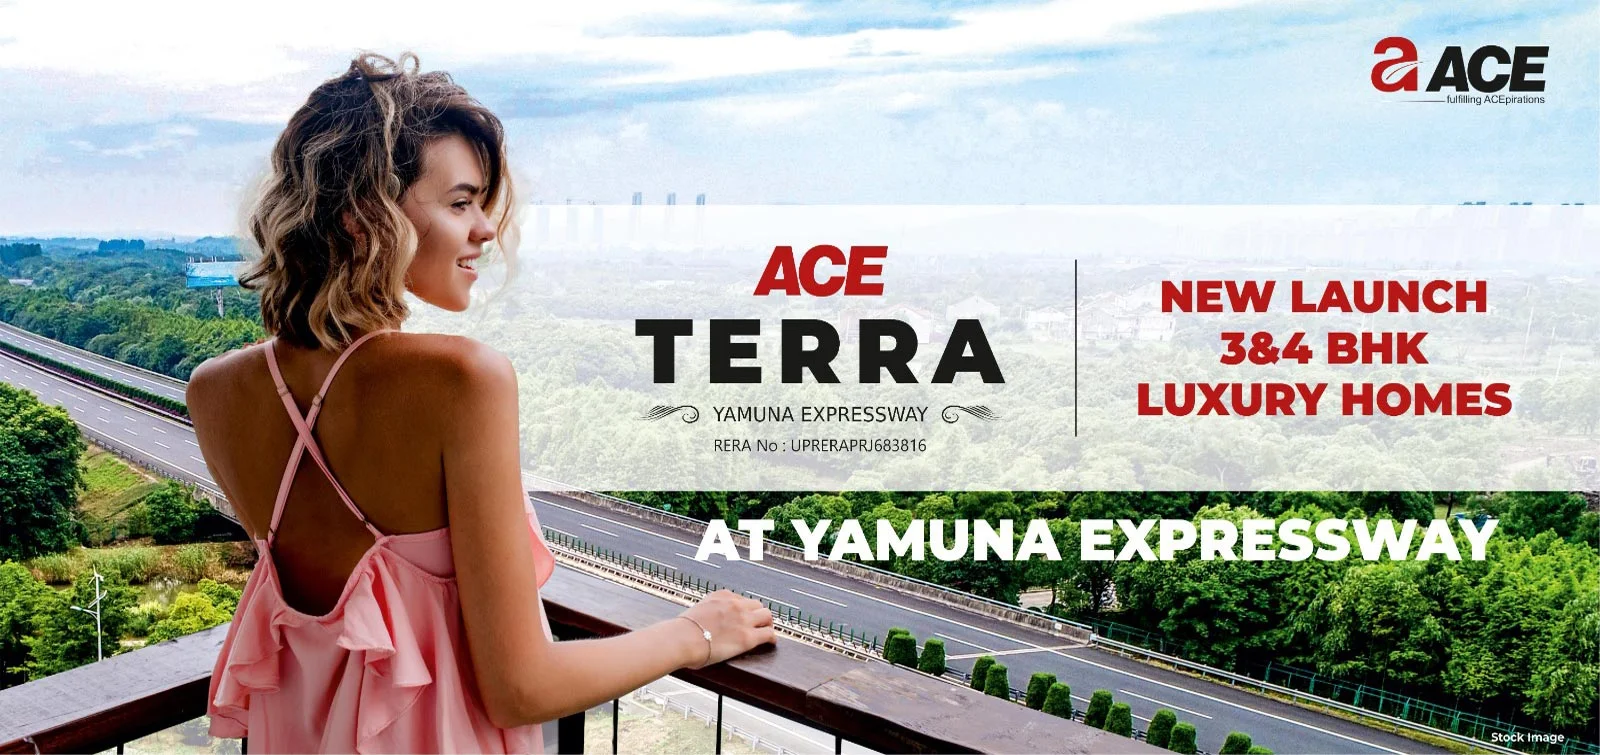 Ace Terra Yamuna Expressway